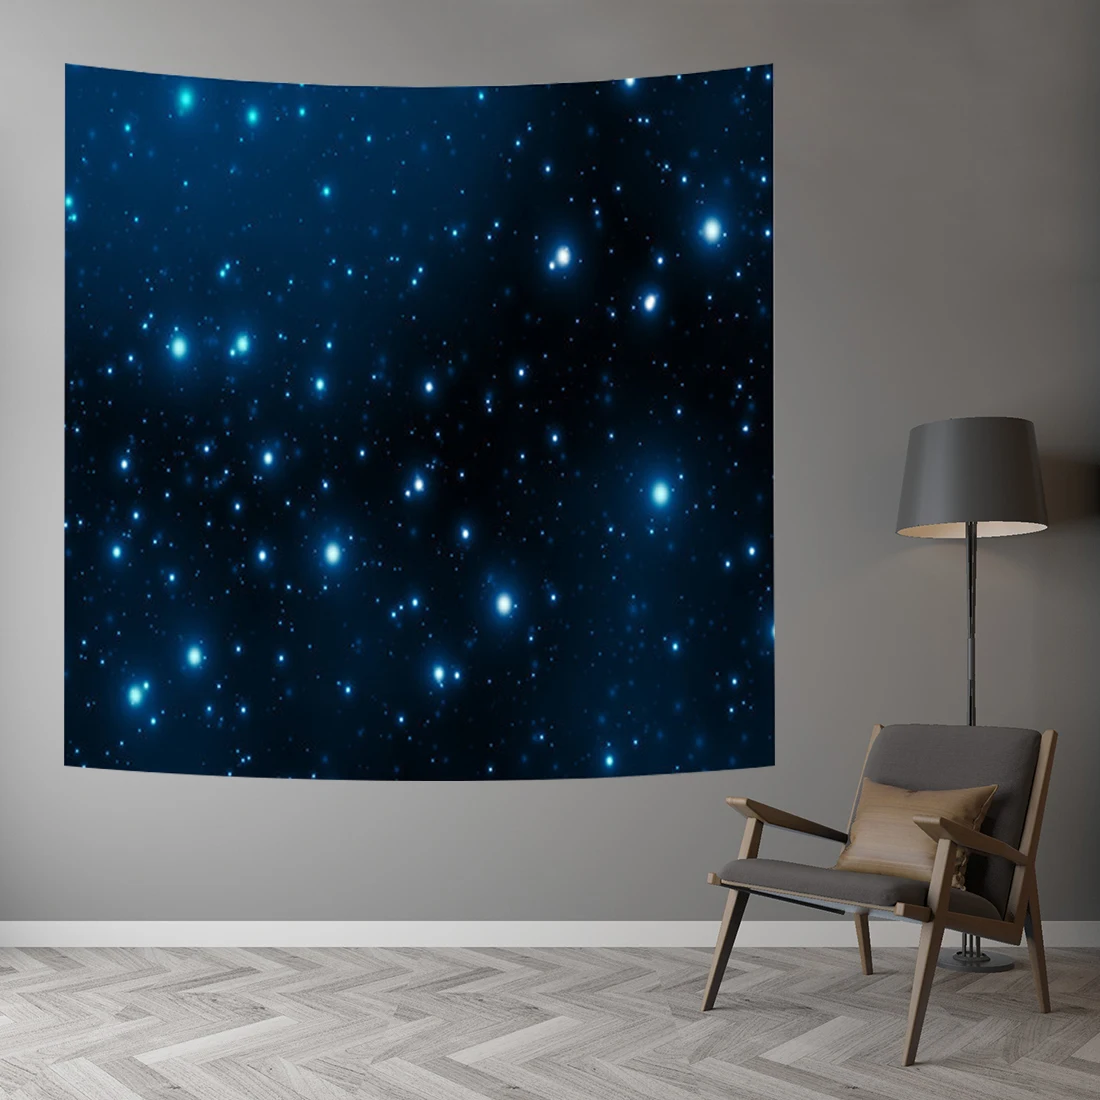 Galaxy стене висит хиппи-гобелен домашний декор в стиле ретро Йога пляжный коврик 150x130 см/200x150 см/150x102 см - Цвет: 8